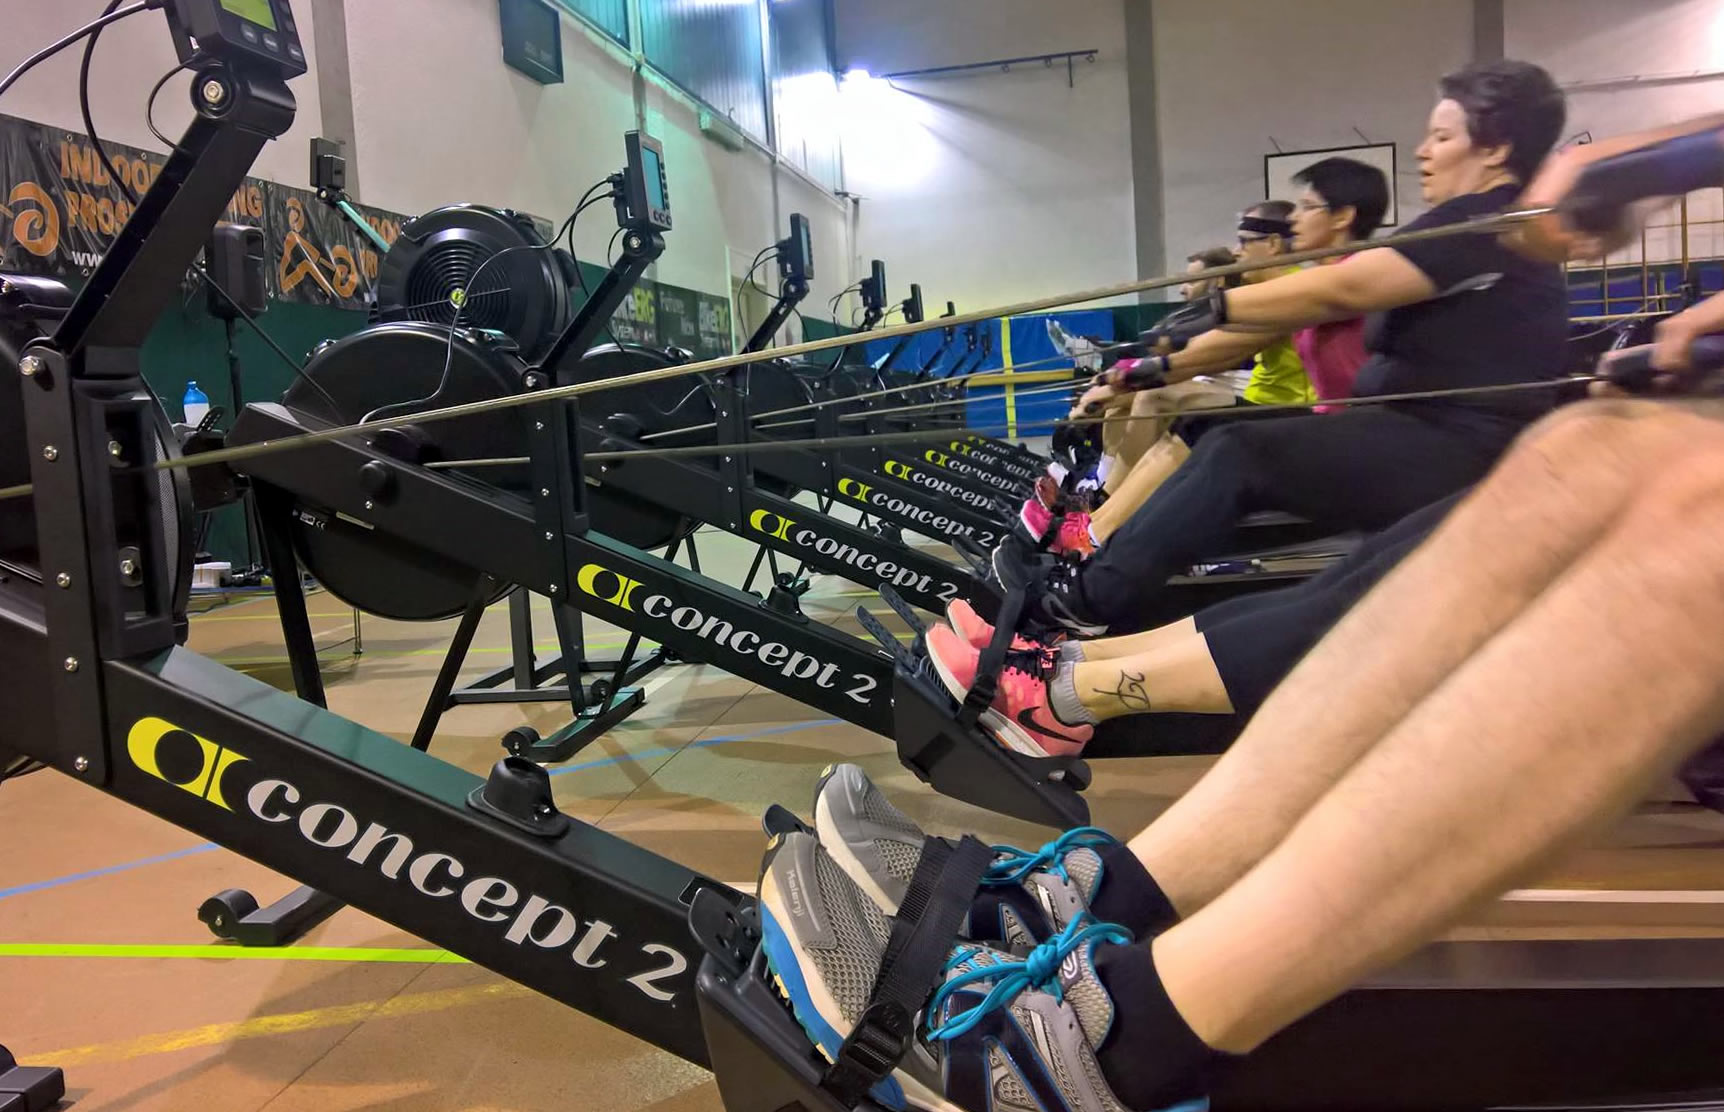 attività Indoor Rowing in palestra a Trento | Prosport a.s.d. Trento